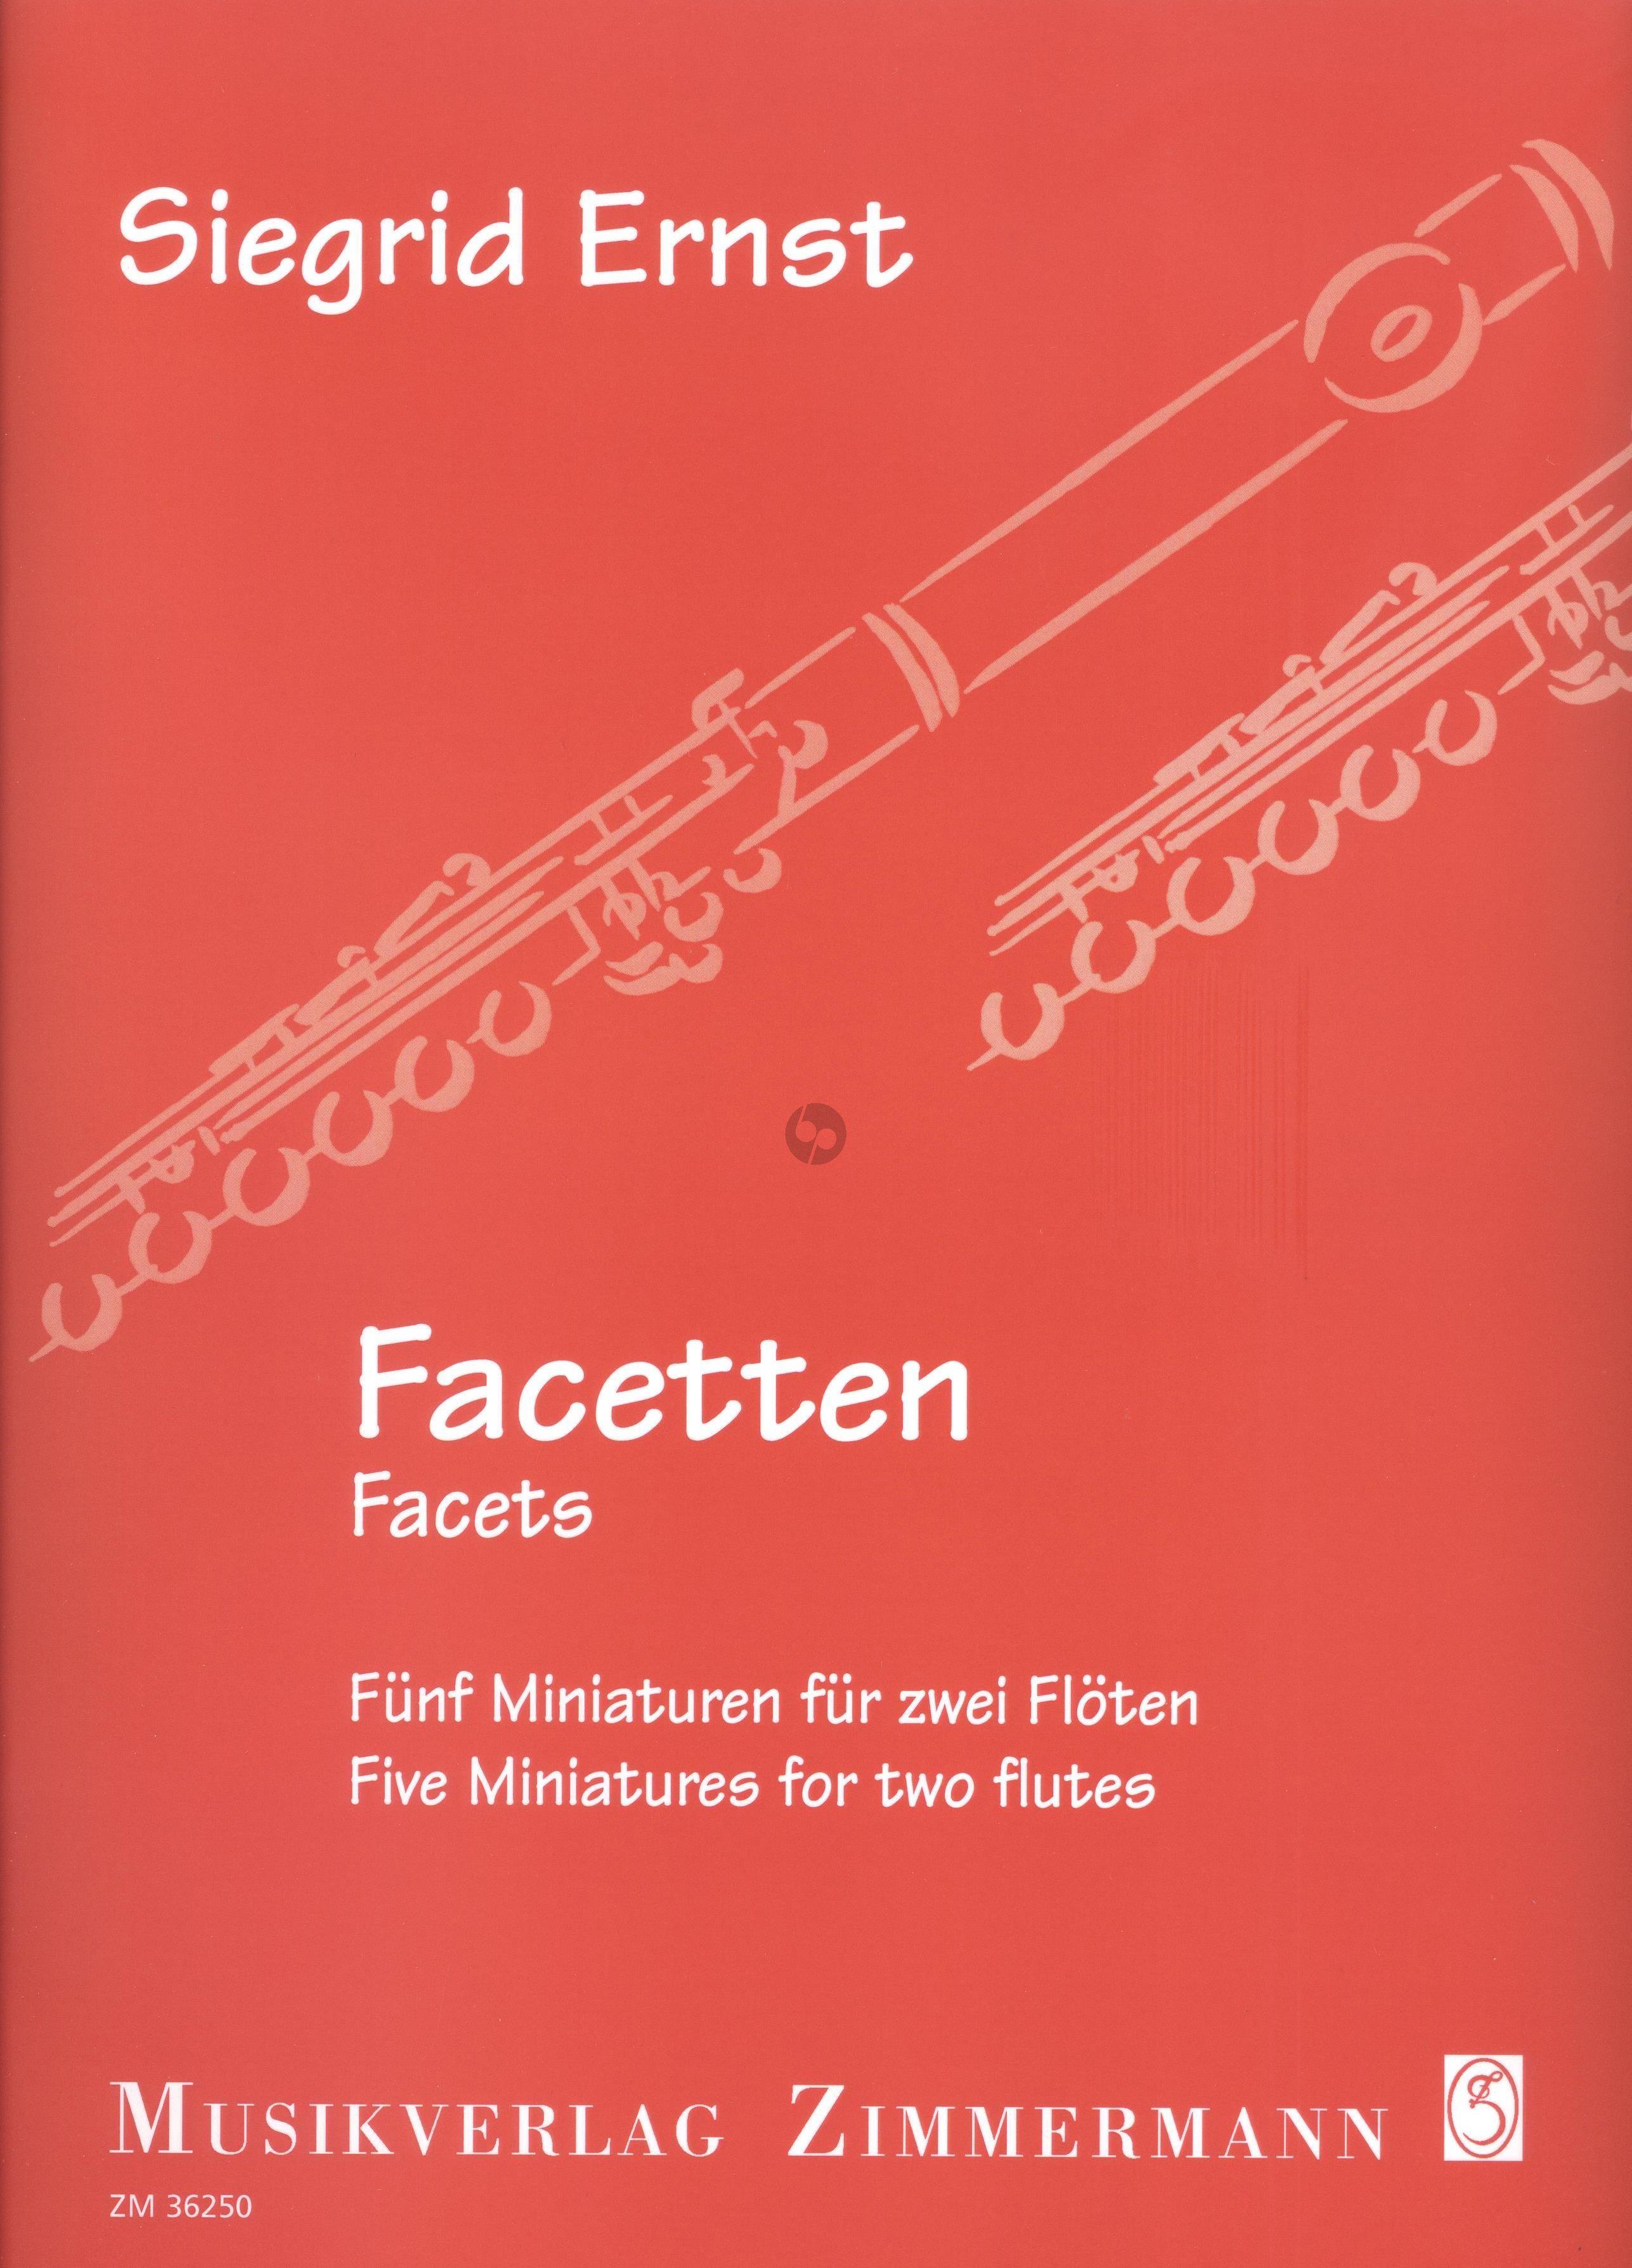 Facetten, Fünf Miniaturen - Siegrid Ernst | Suono Flauti